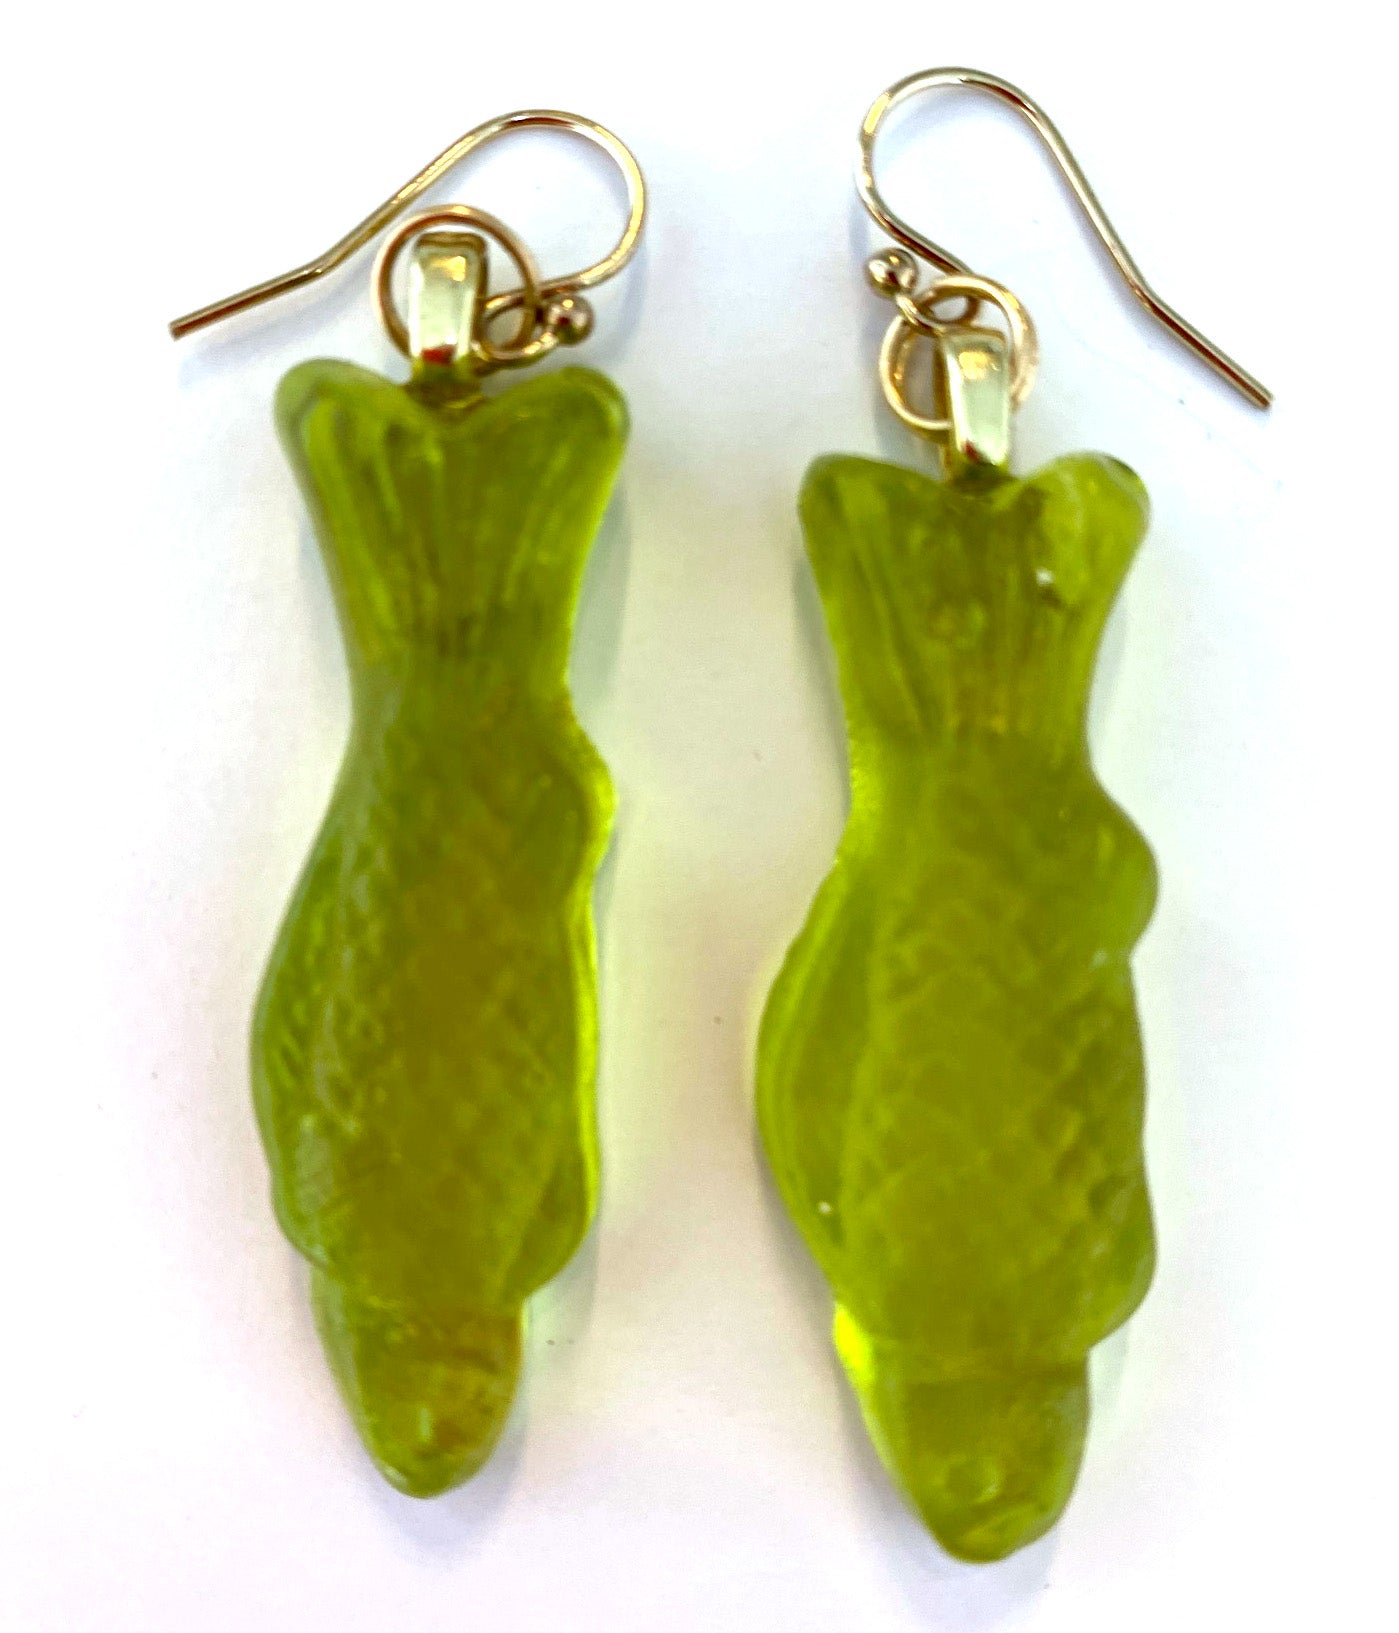 23. Hot Glass Swedish Fish Earring (Green Apple)